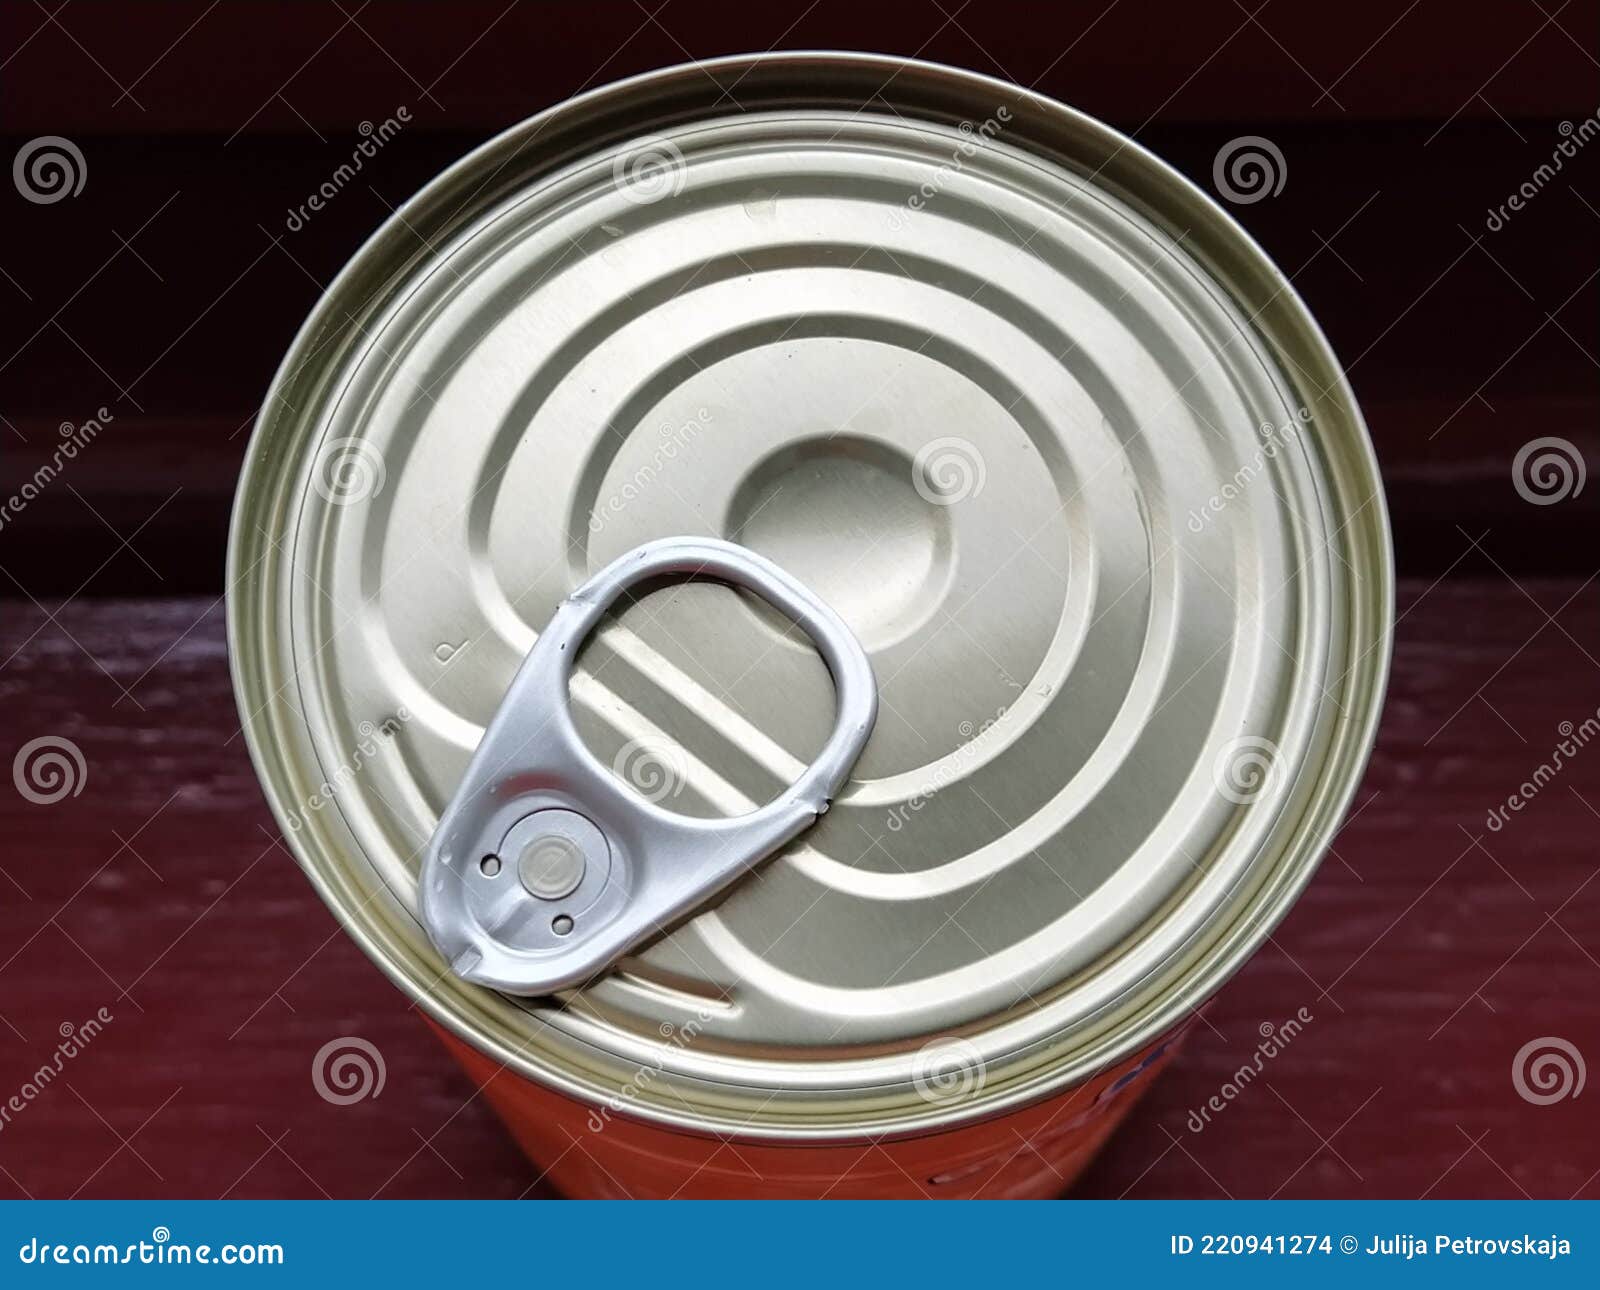 https://thumbs.dreamstime.com/z/canned-food-lid-bottle-opener-hook-metal-can-top-easy-opening-canned-food-lid-bottle-opener-hook-metal-can-top-220941274.jpg